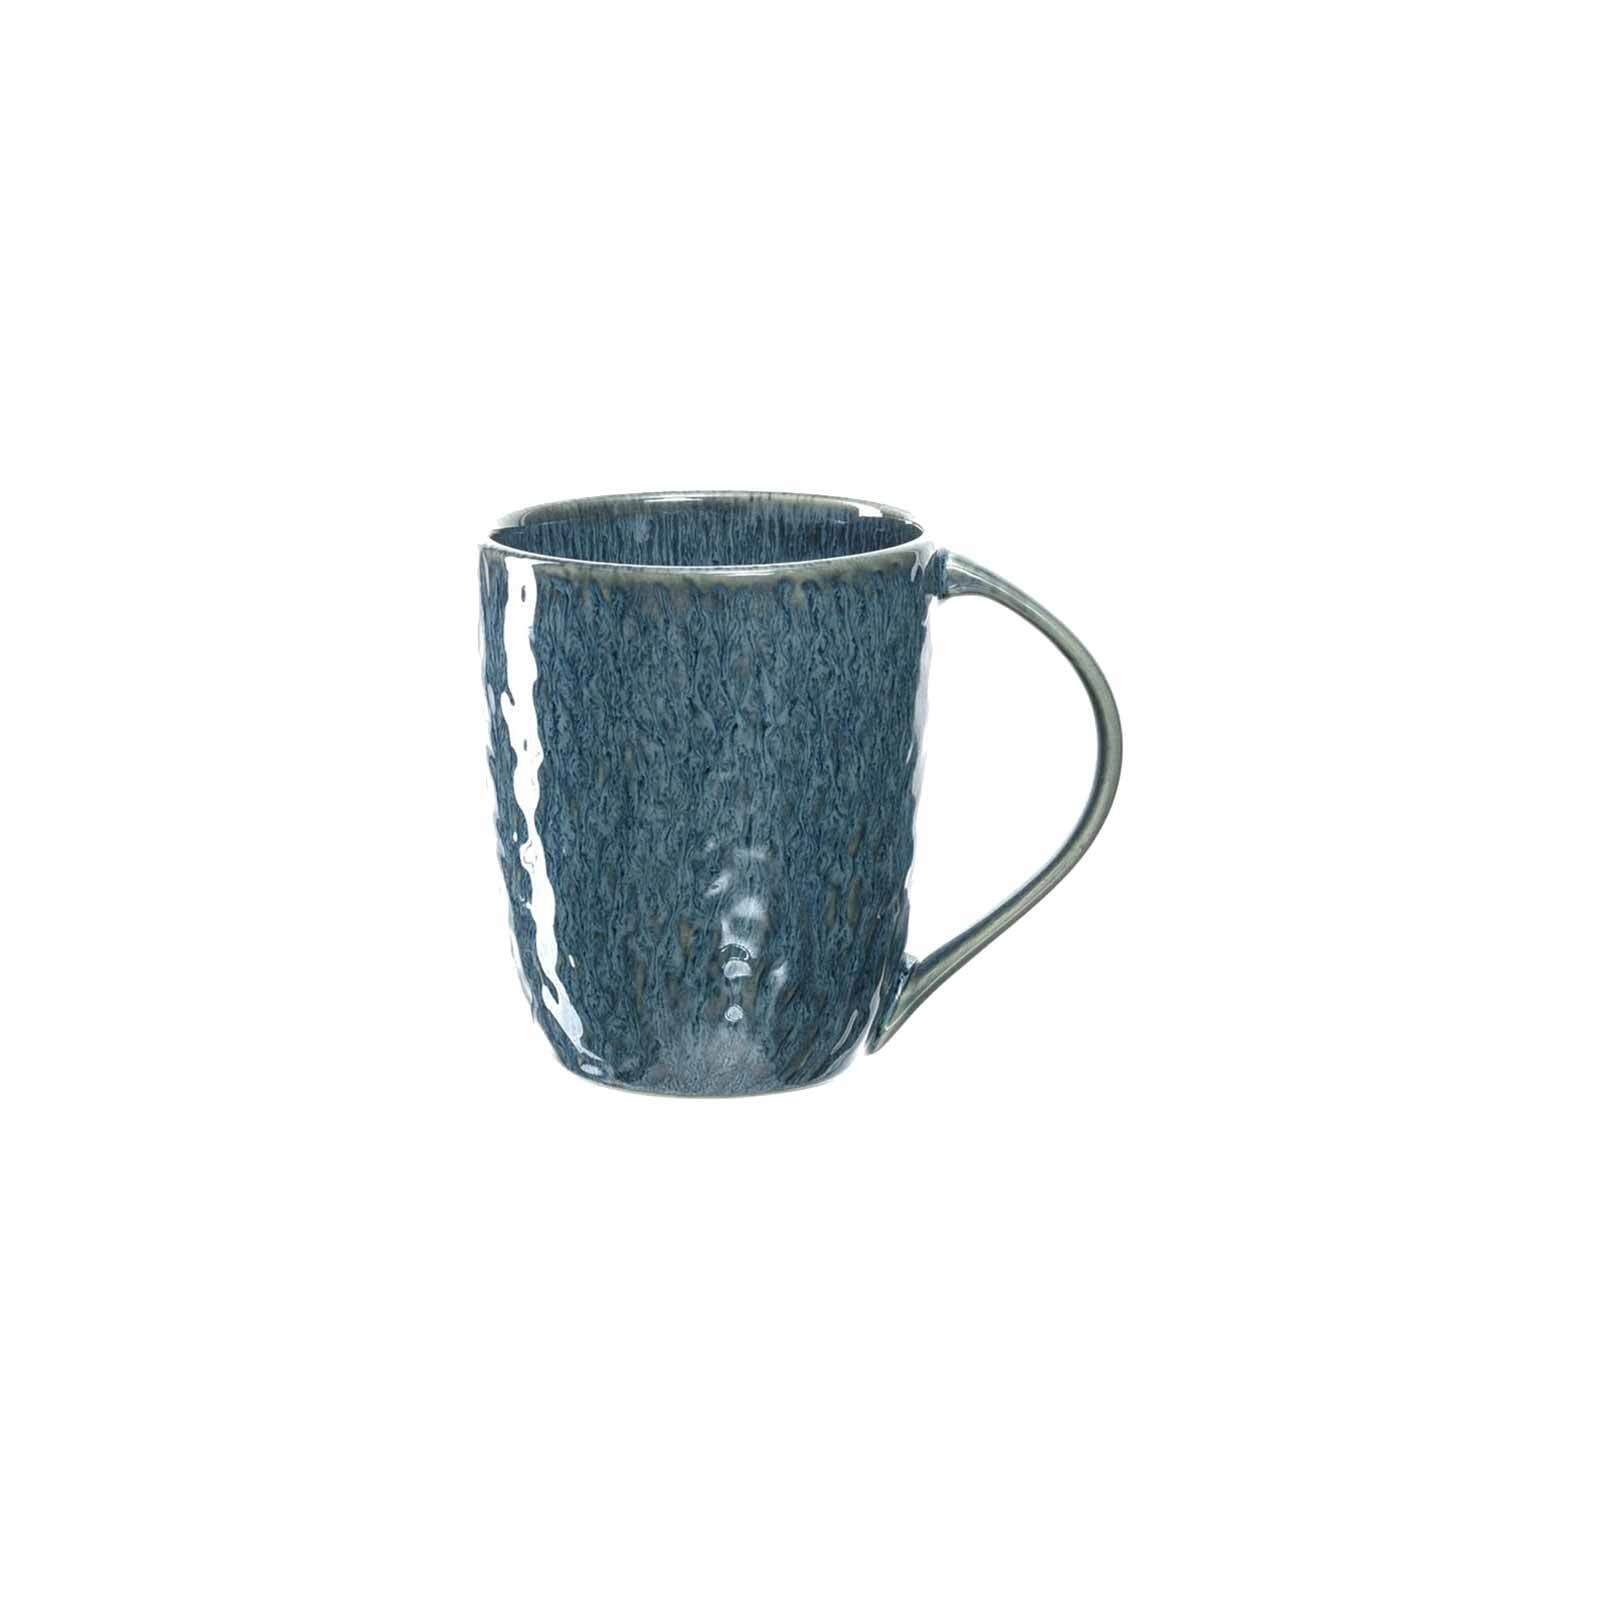 LEONARDO Kombiservice Matera Tafelservice 30er Set (30-tlg), Keramik Blau